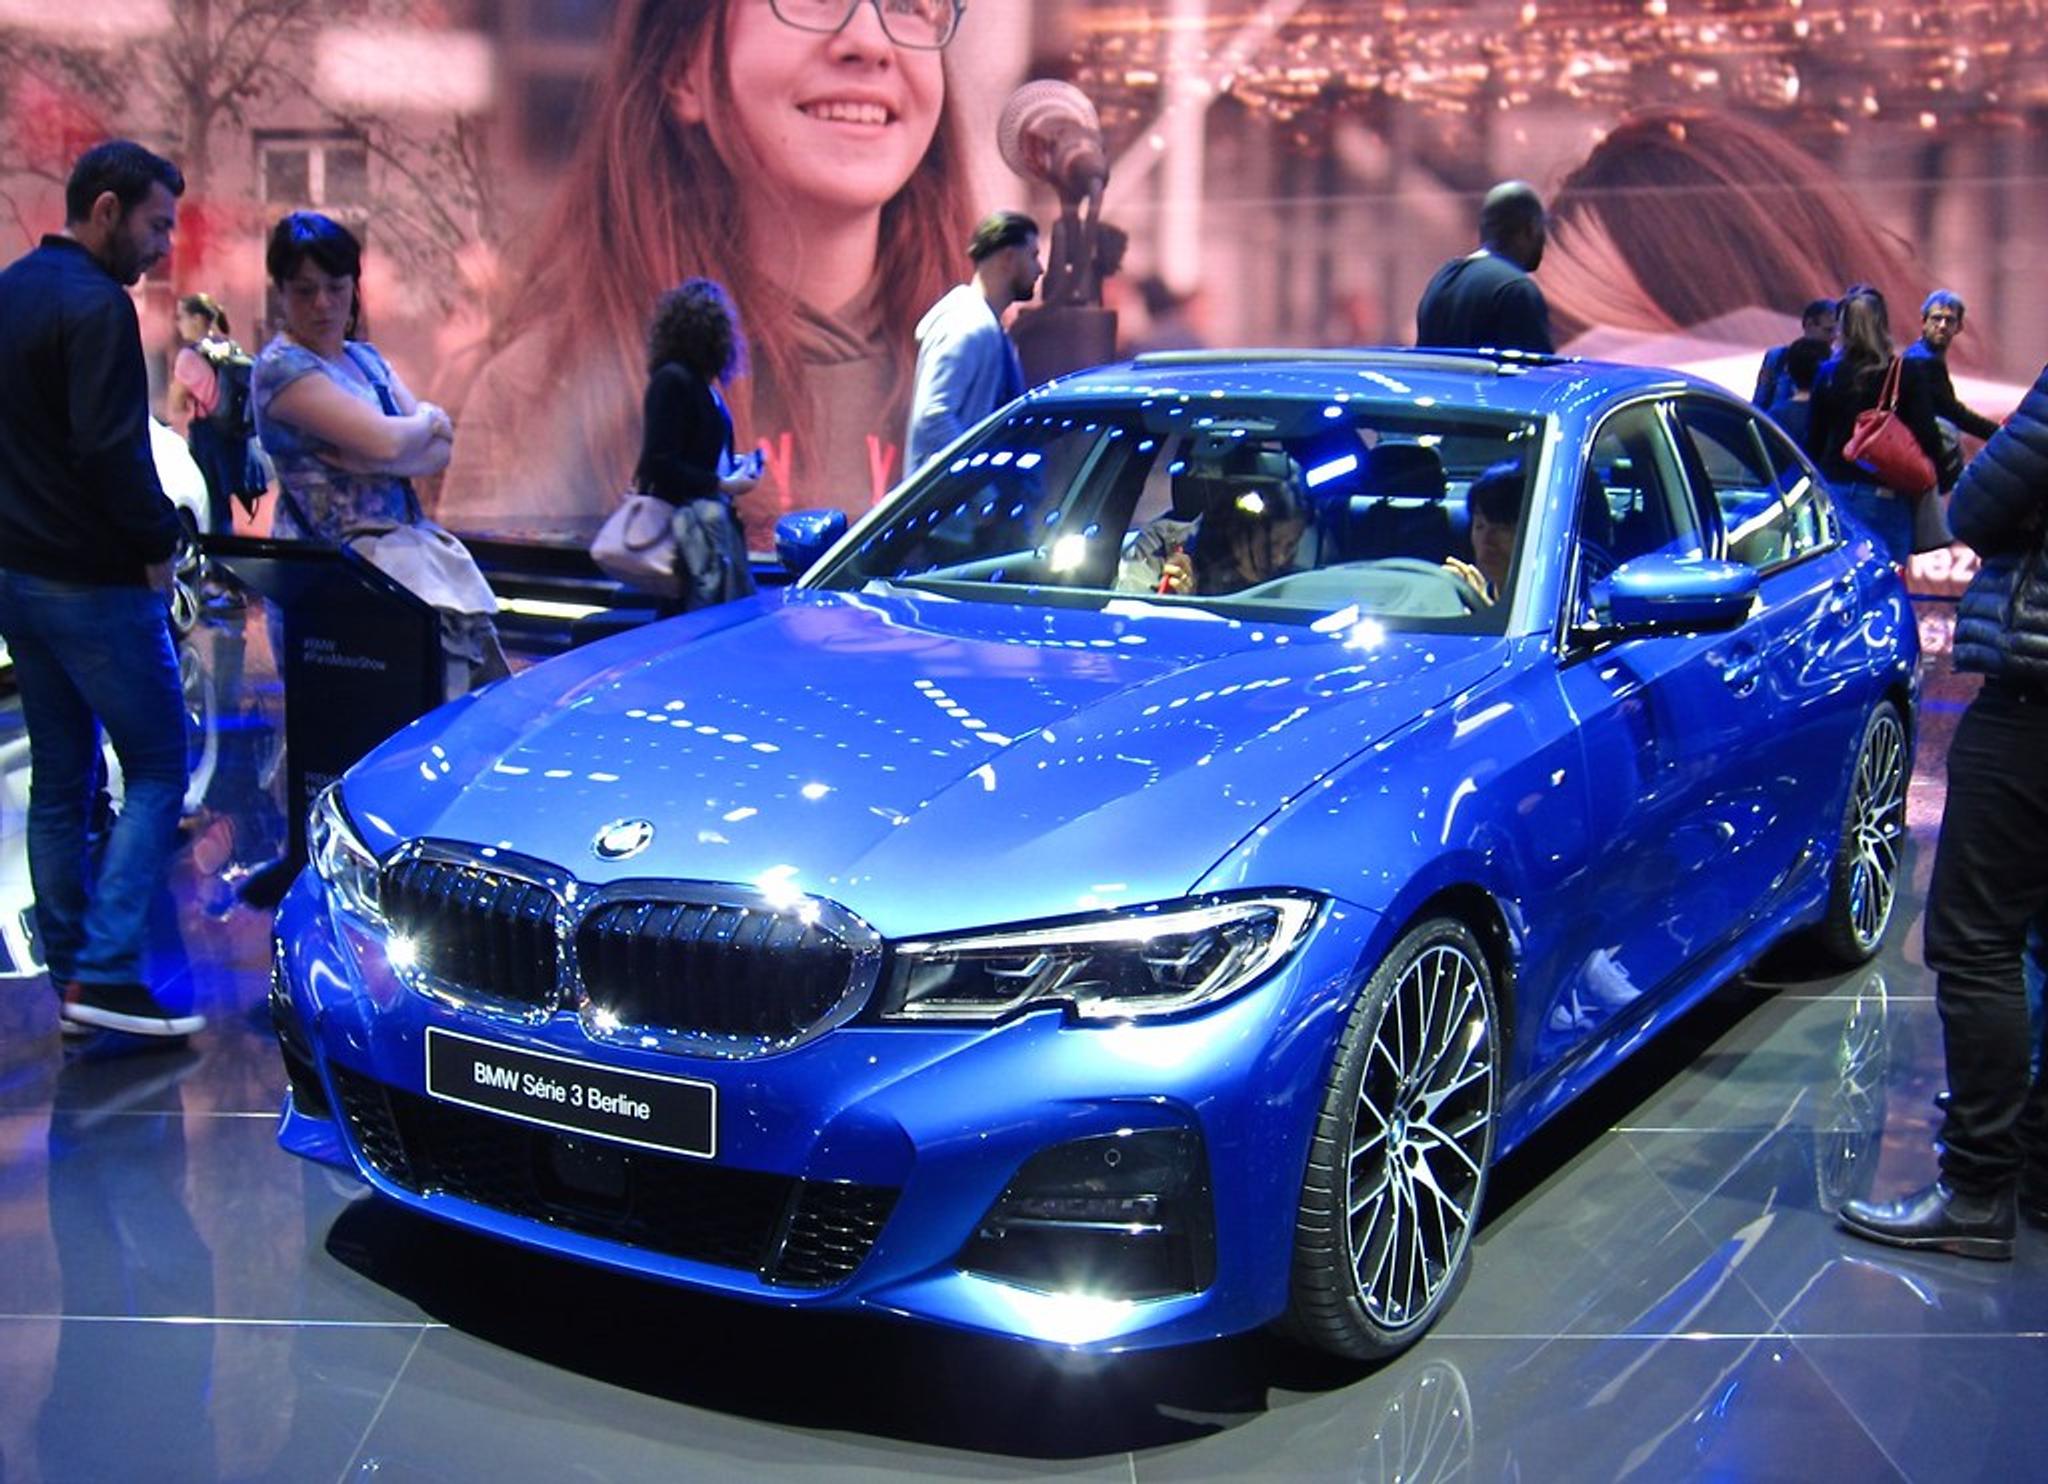 Metallic blue BMW 3 series in a showroom